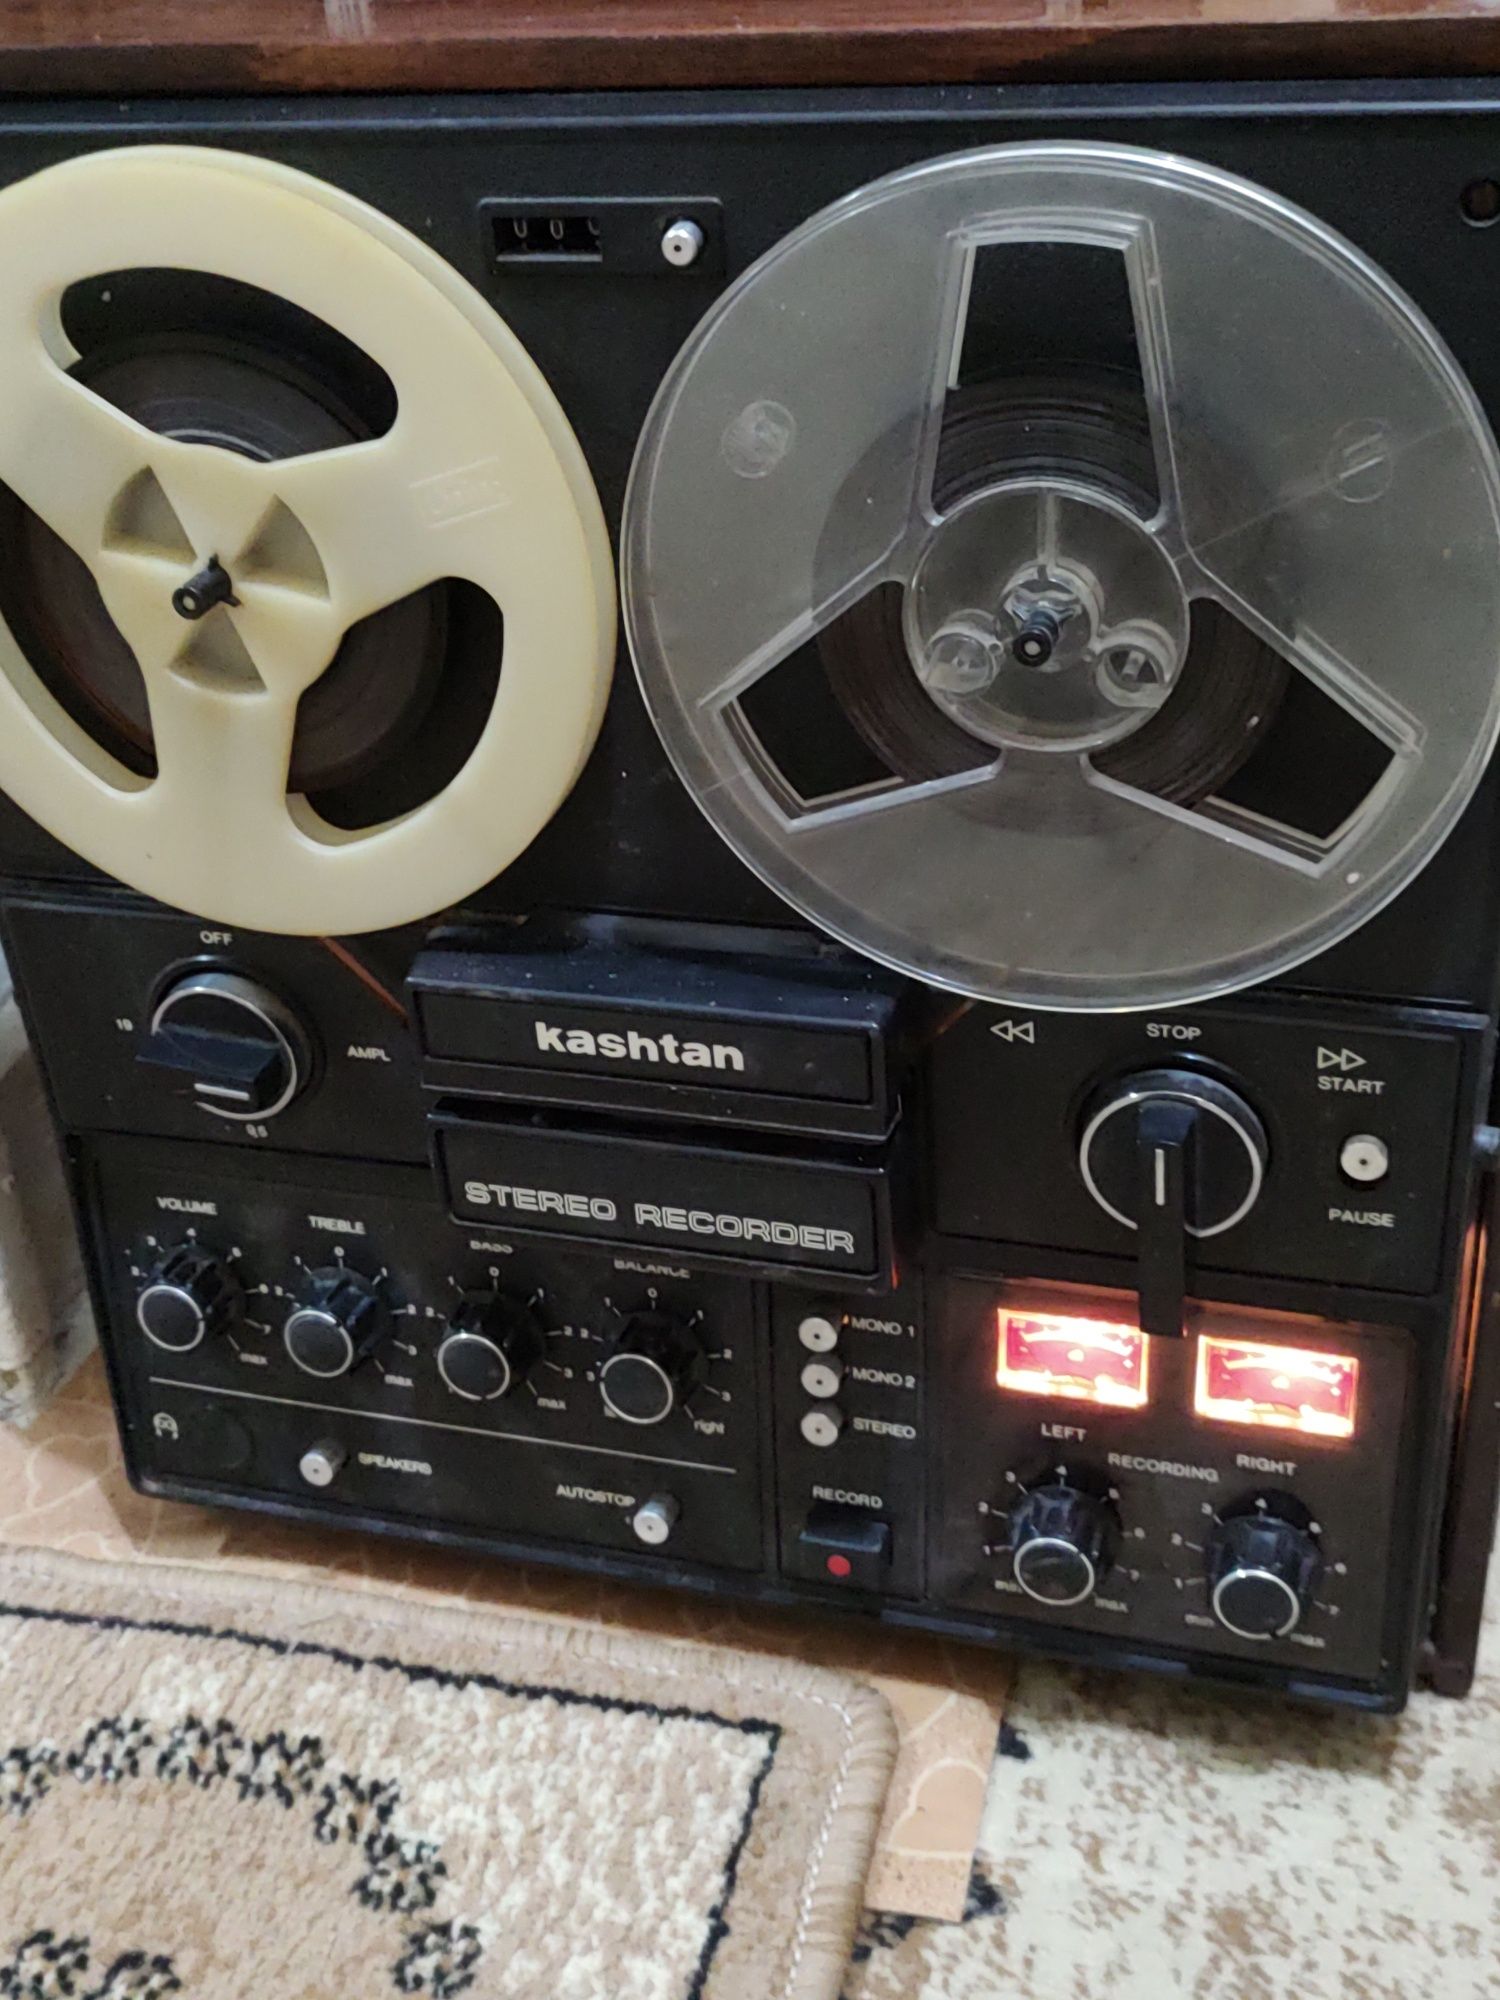 kashtan stereo recorder /кащан стерео рекордер